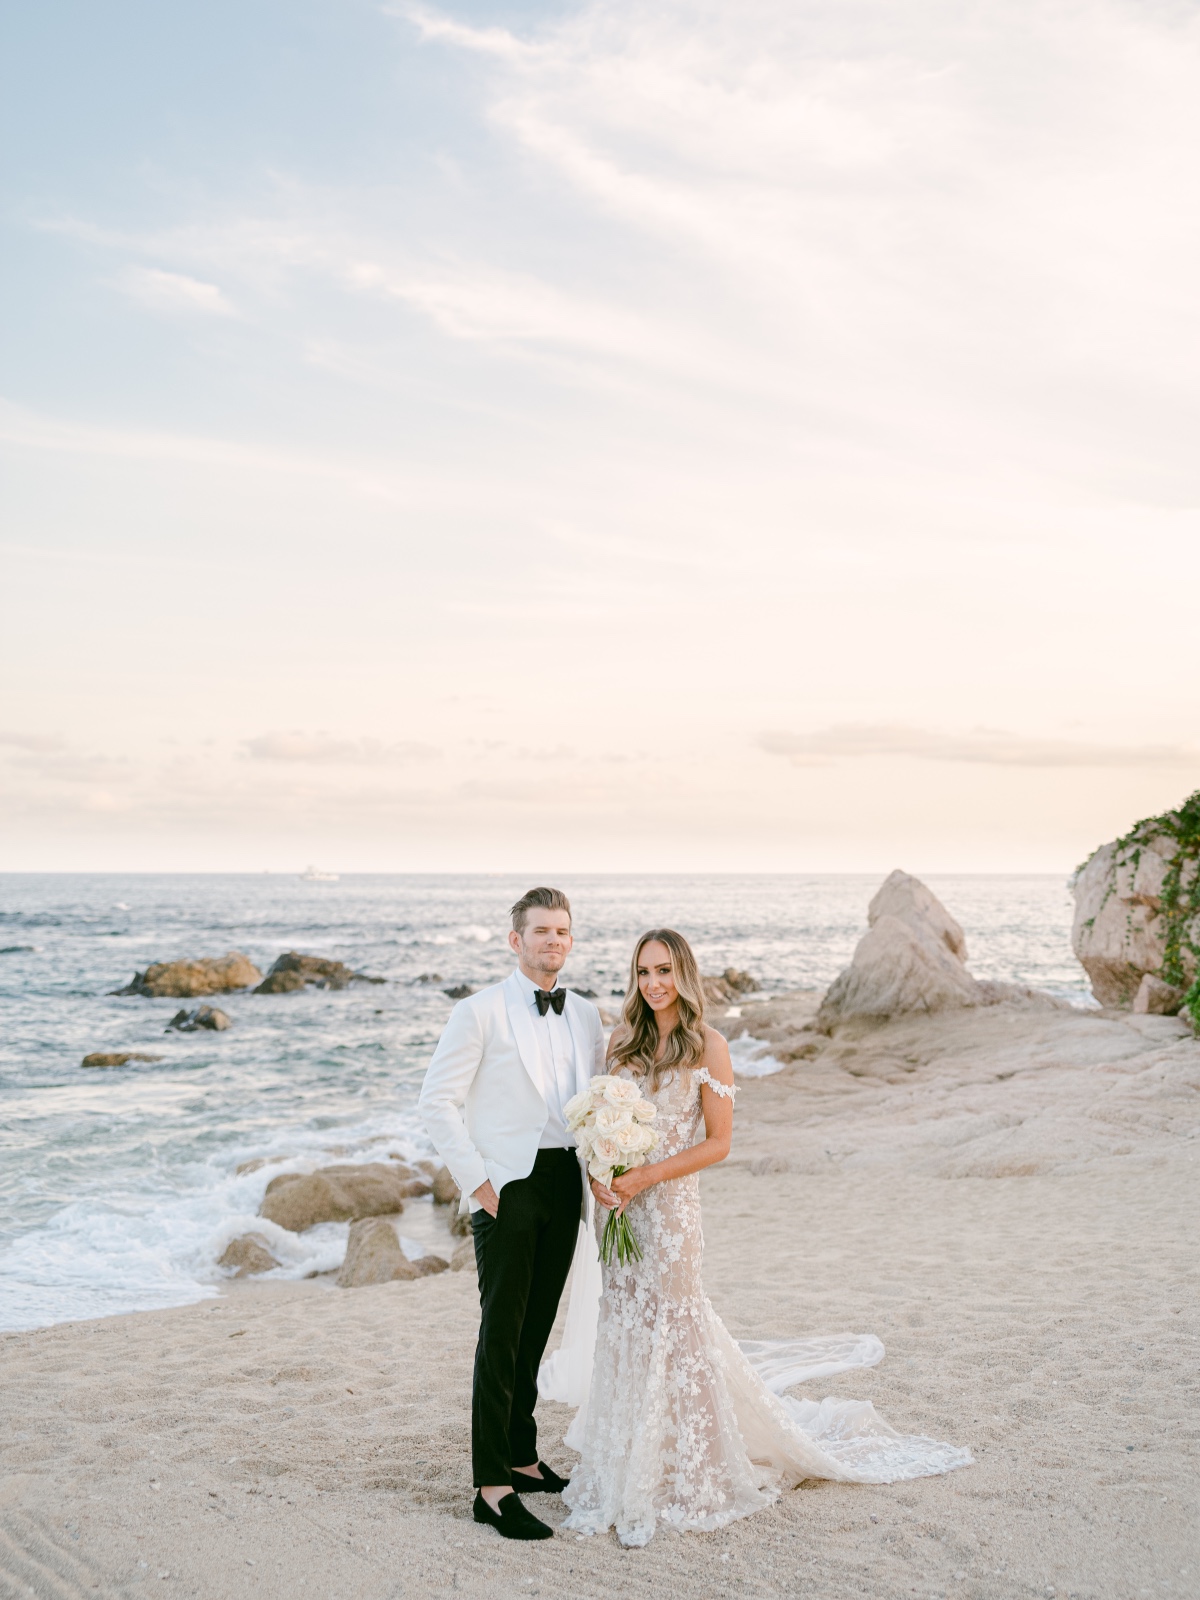 Portrait of bride and groom on beach in front of ocean